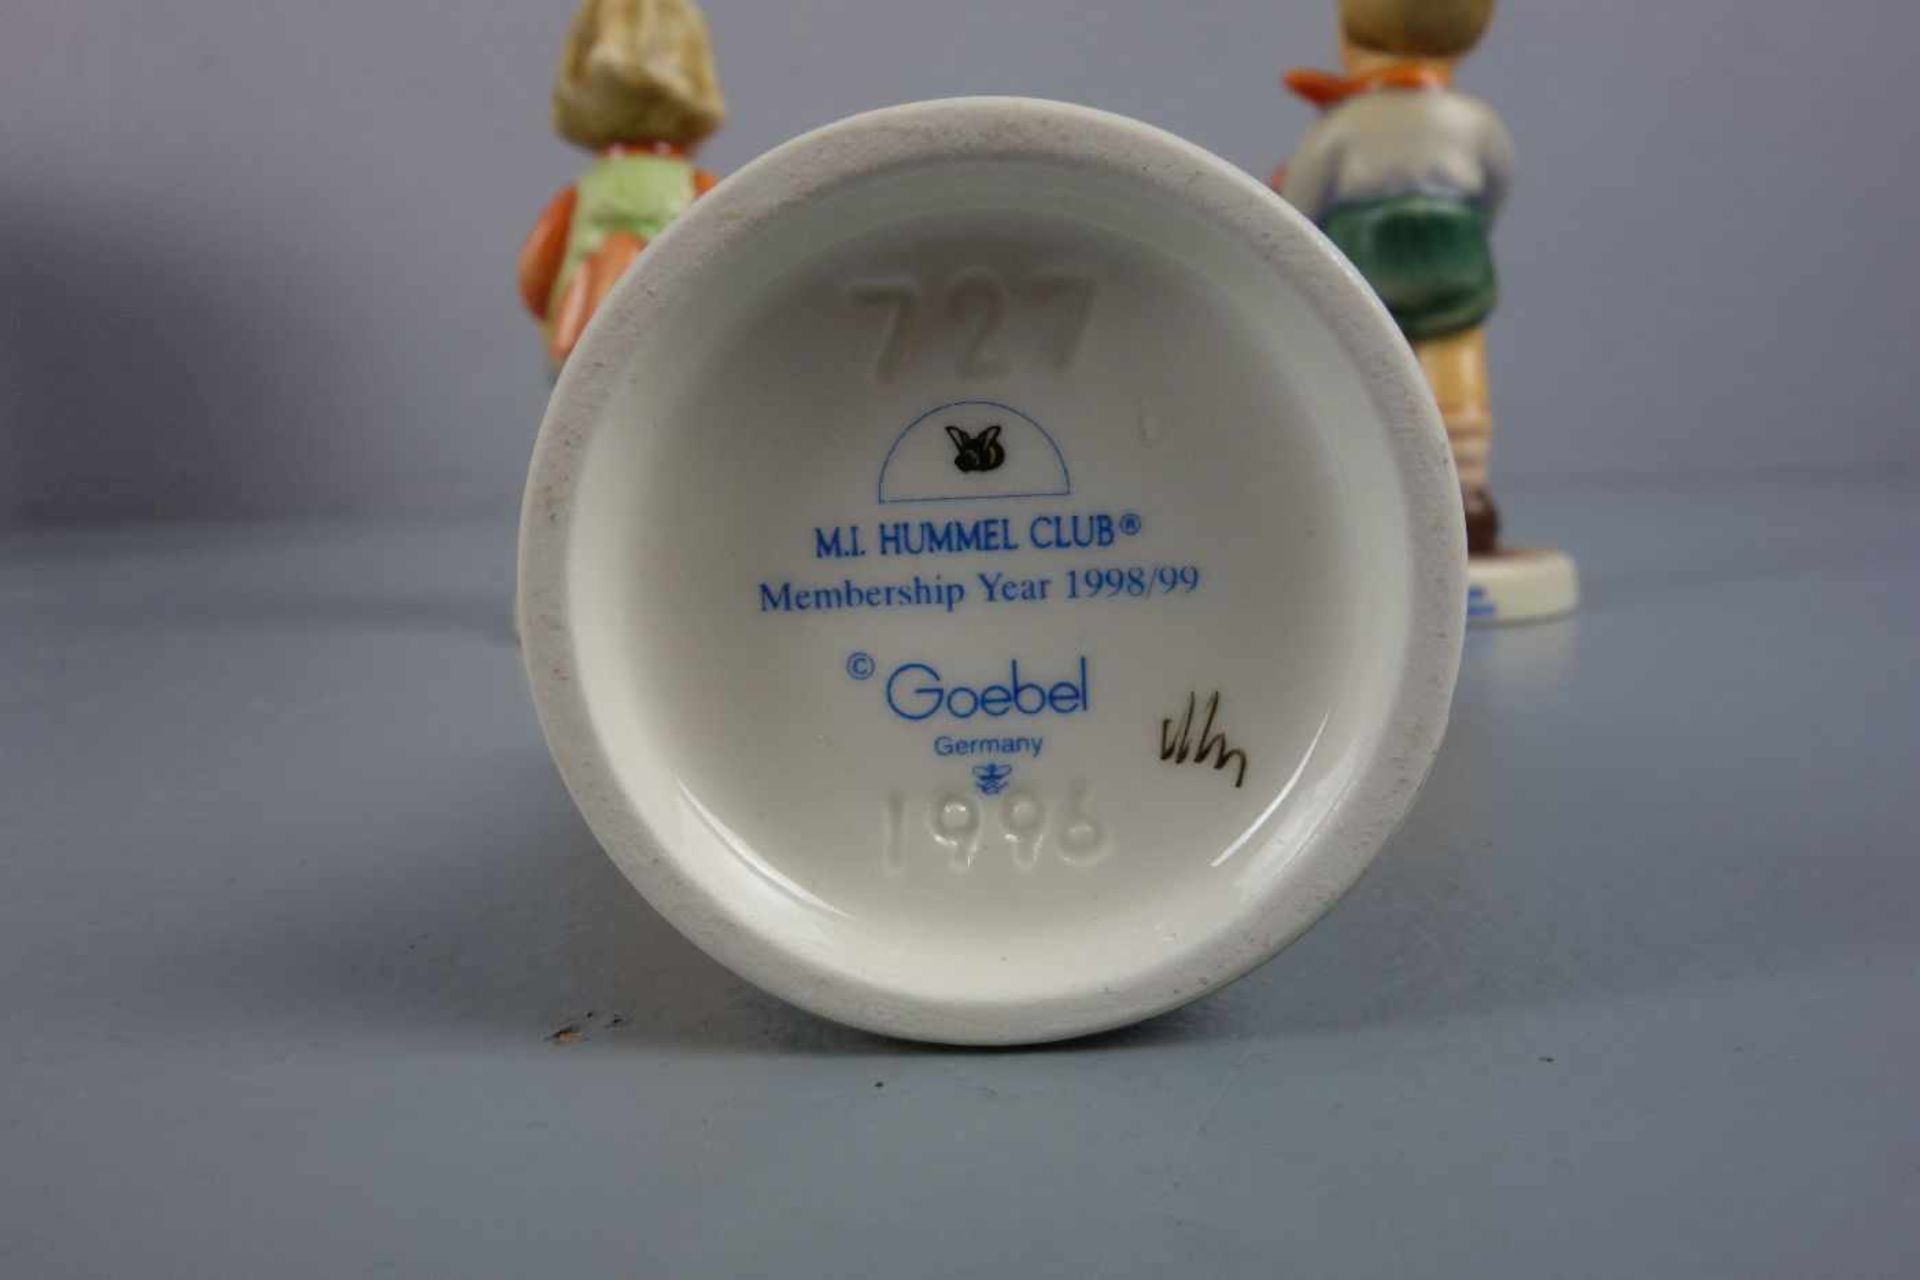 DREI HUMMELFIGUREN / porcelain figures: Goebel Hummel-Figuren, Marken nach 1991. "ABC Stunde": Ein - Image 5 of 6